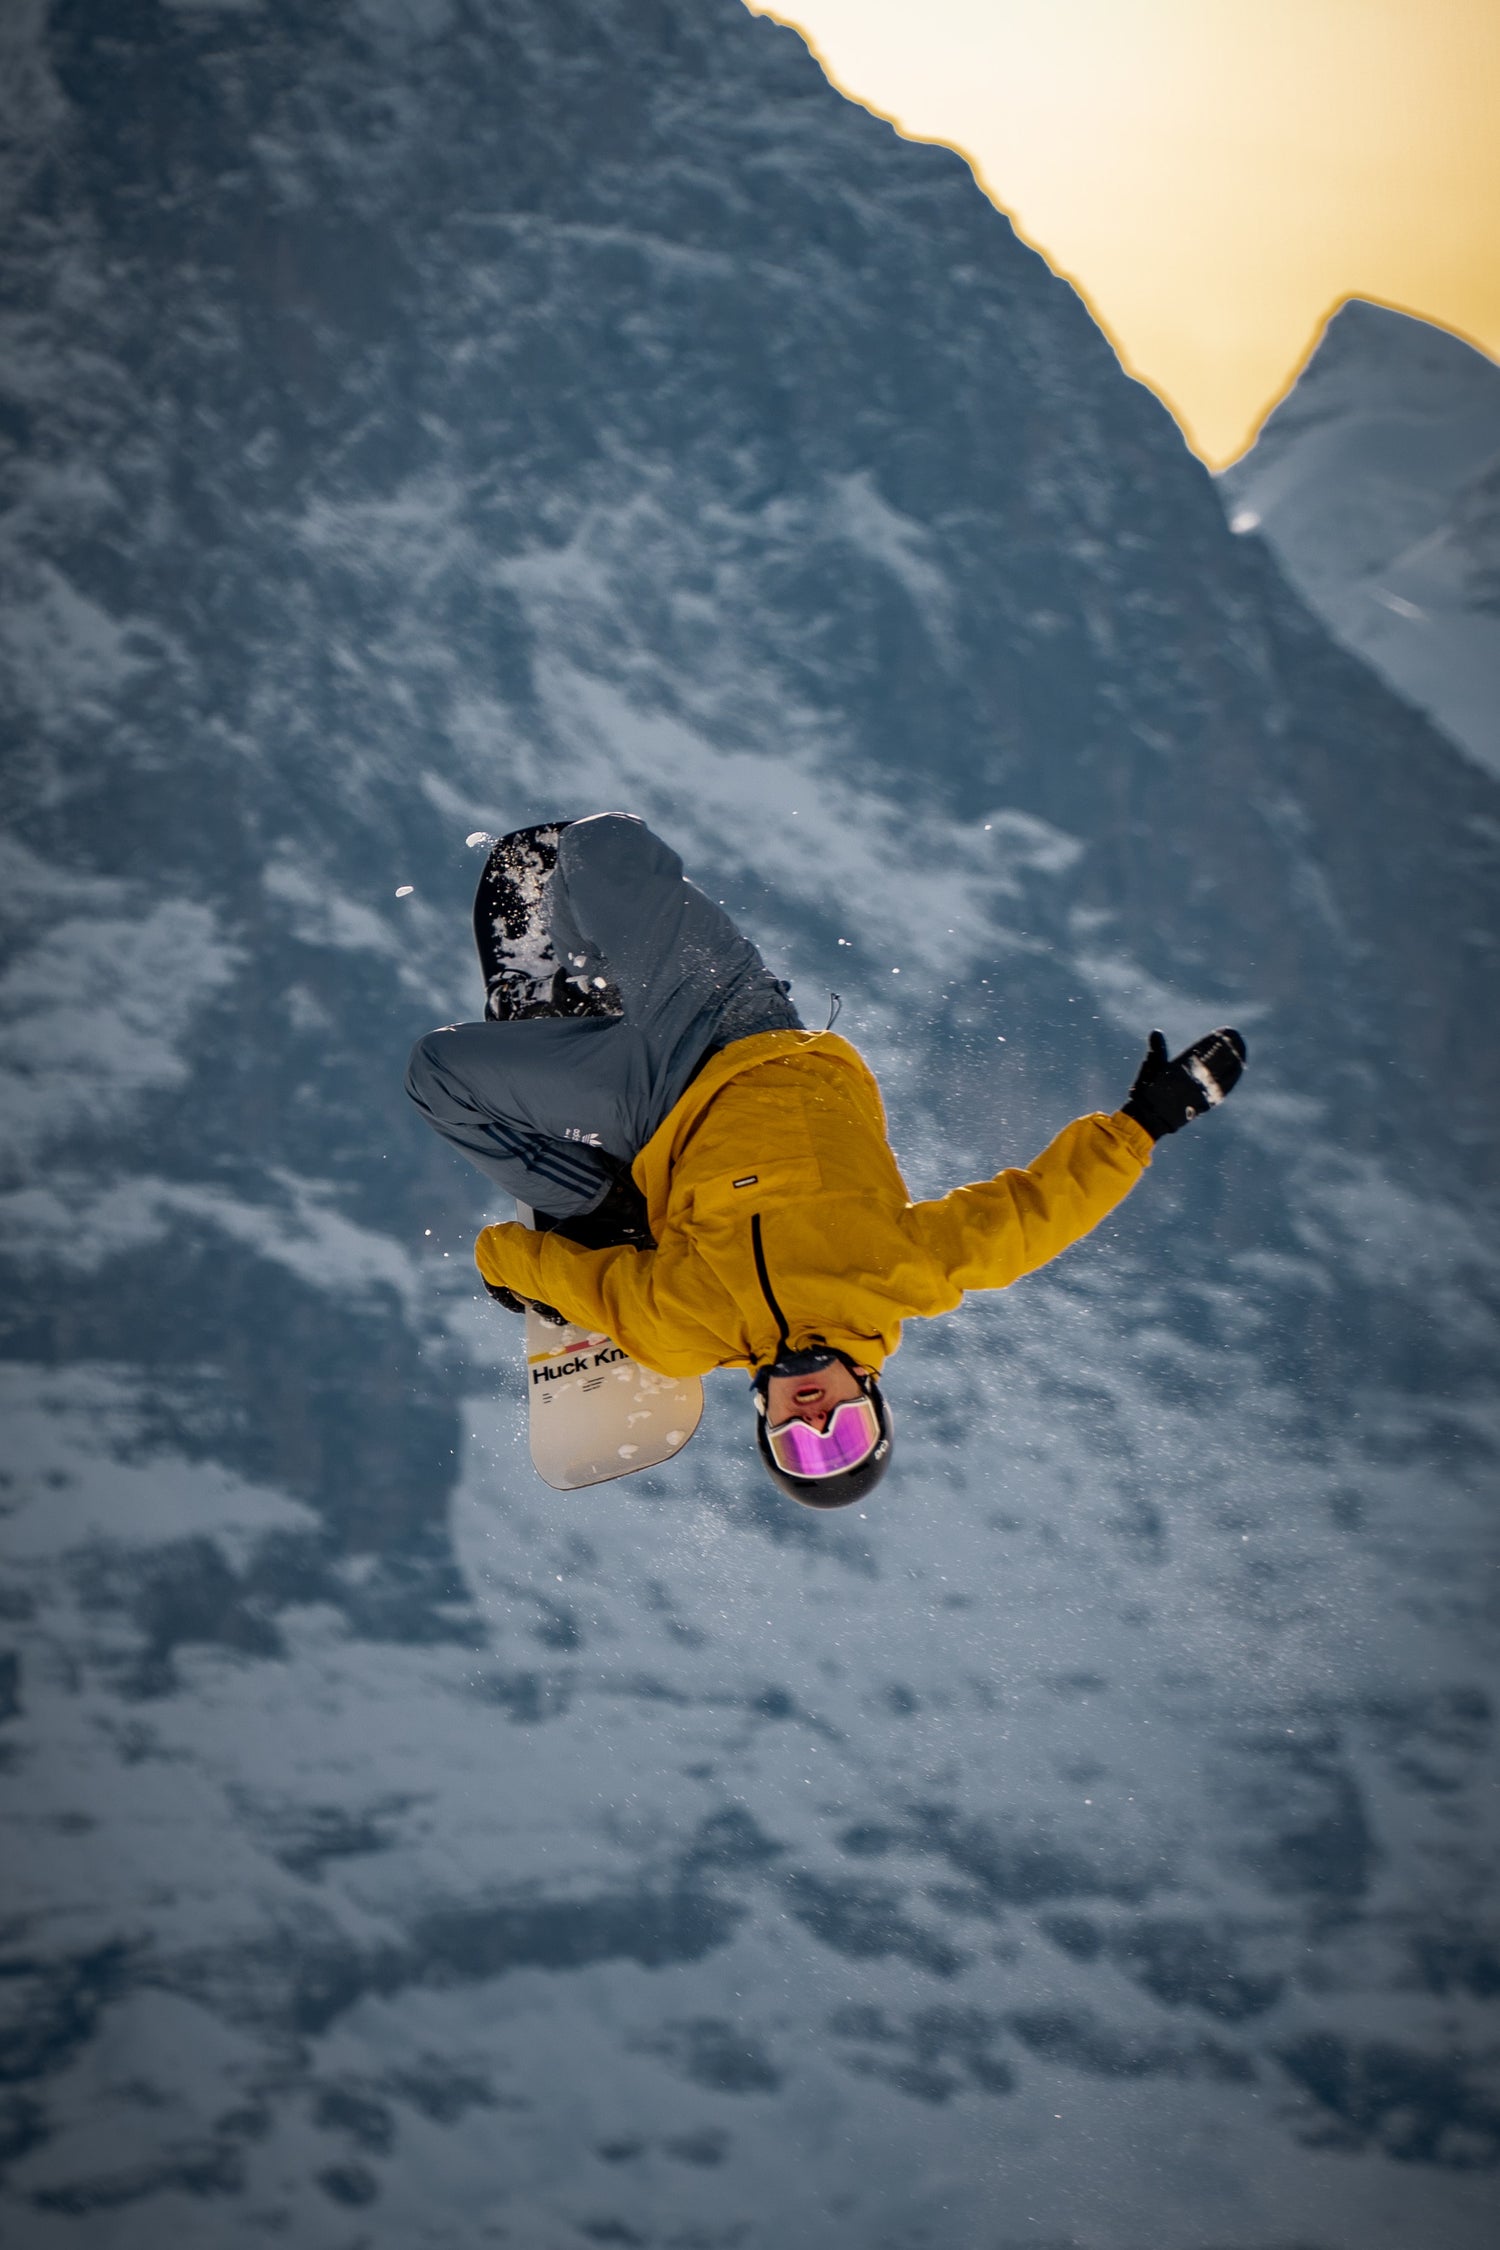 Shaun White's next mountain: businessman, snowboard maker